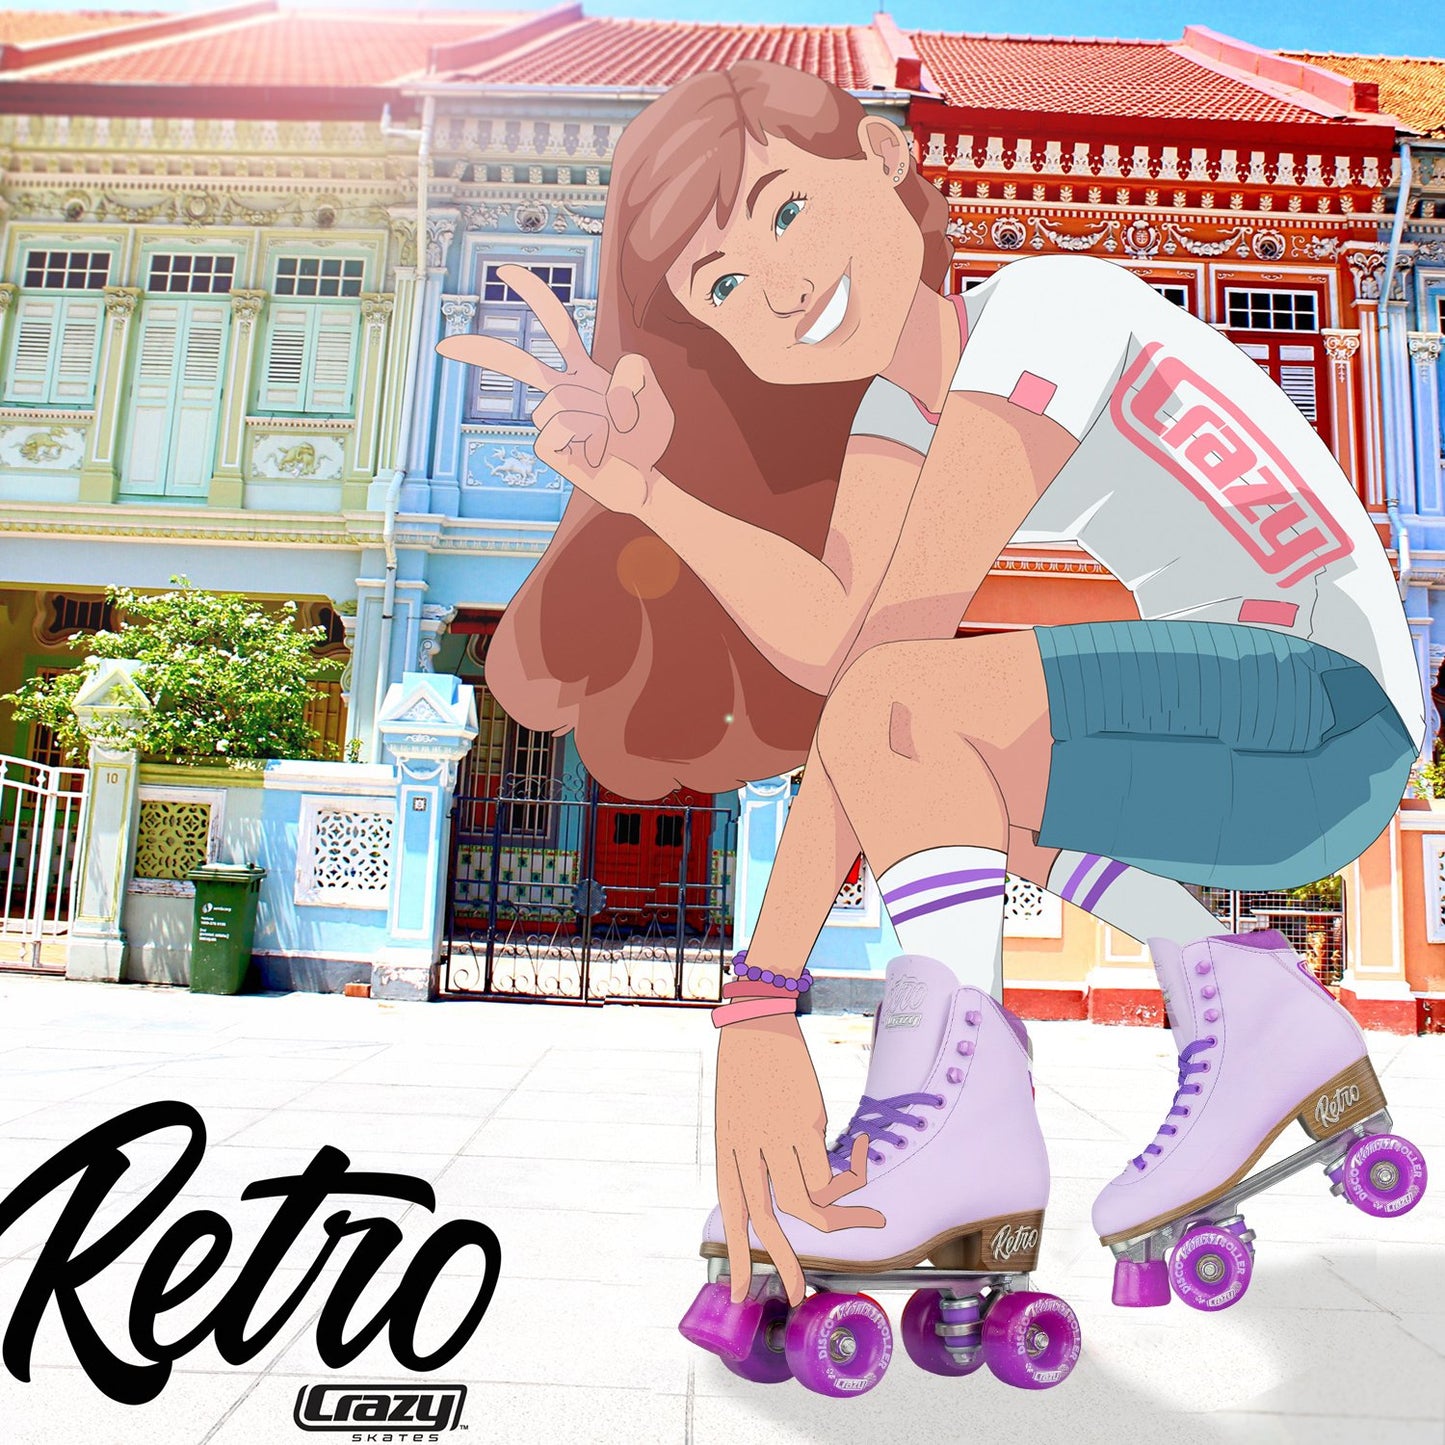 Crazy Skates Classic Vintage Retro Roller Skates - Purple - Momma Trucker Skates